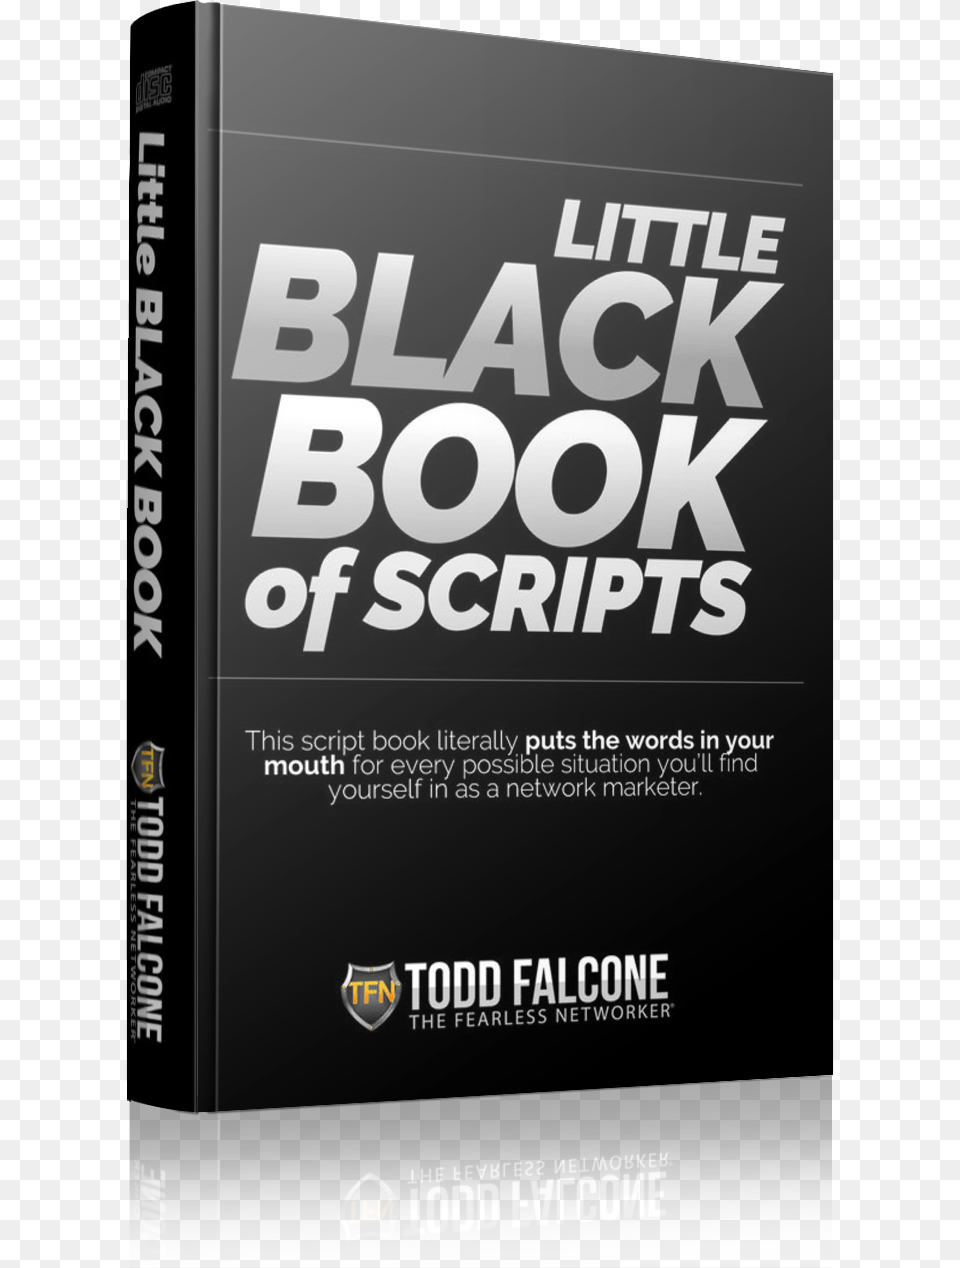 Little Black Book Of Scripts Publication, Advertisement, Poster Png